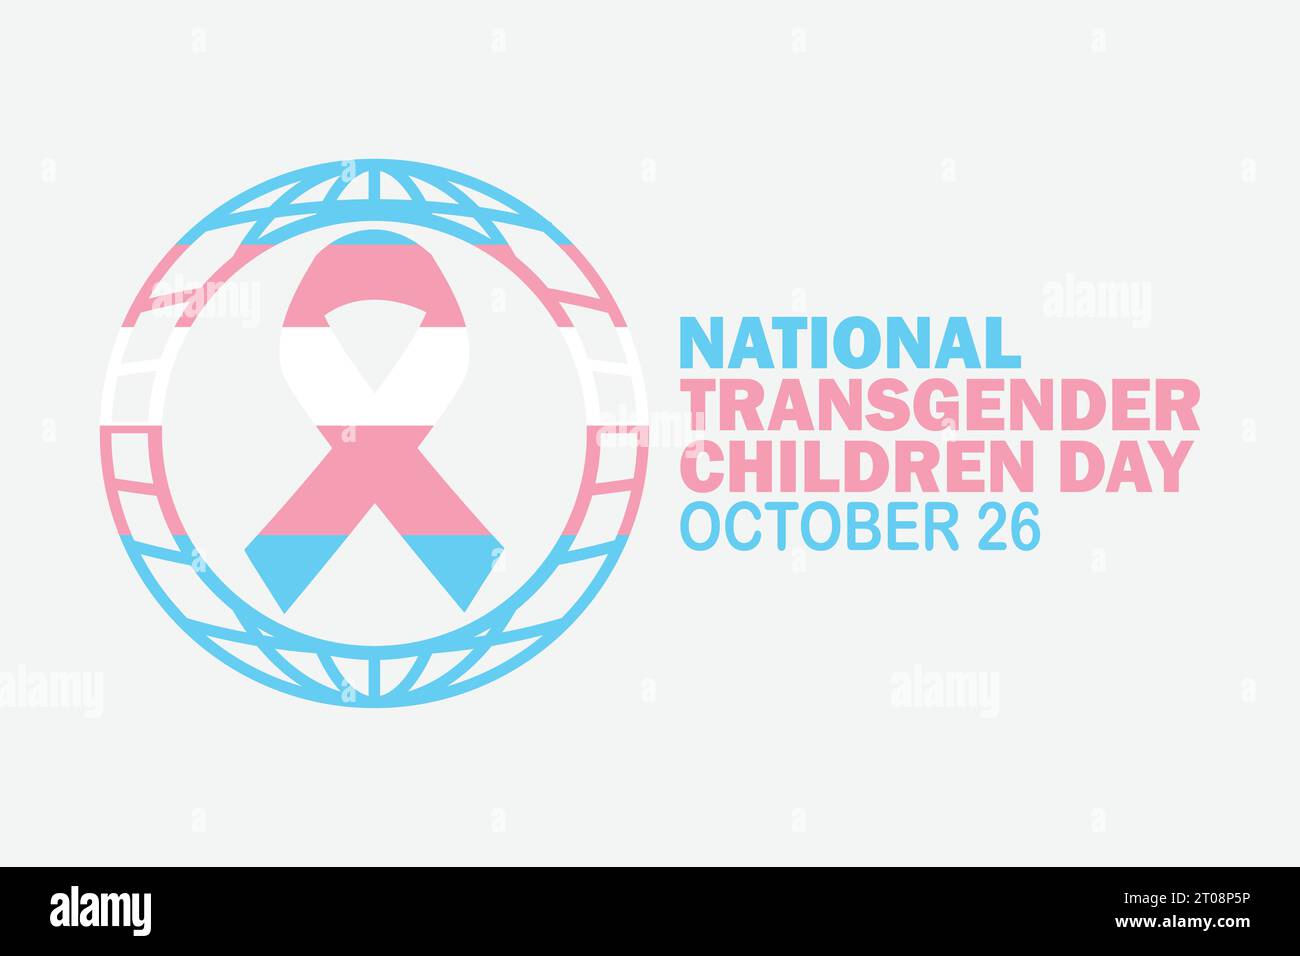 National Transgender Children Day Vector Template Design Illustration. October 26. Suitable for greeting card, poster and banner Stock Vector